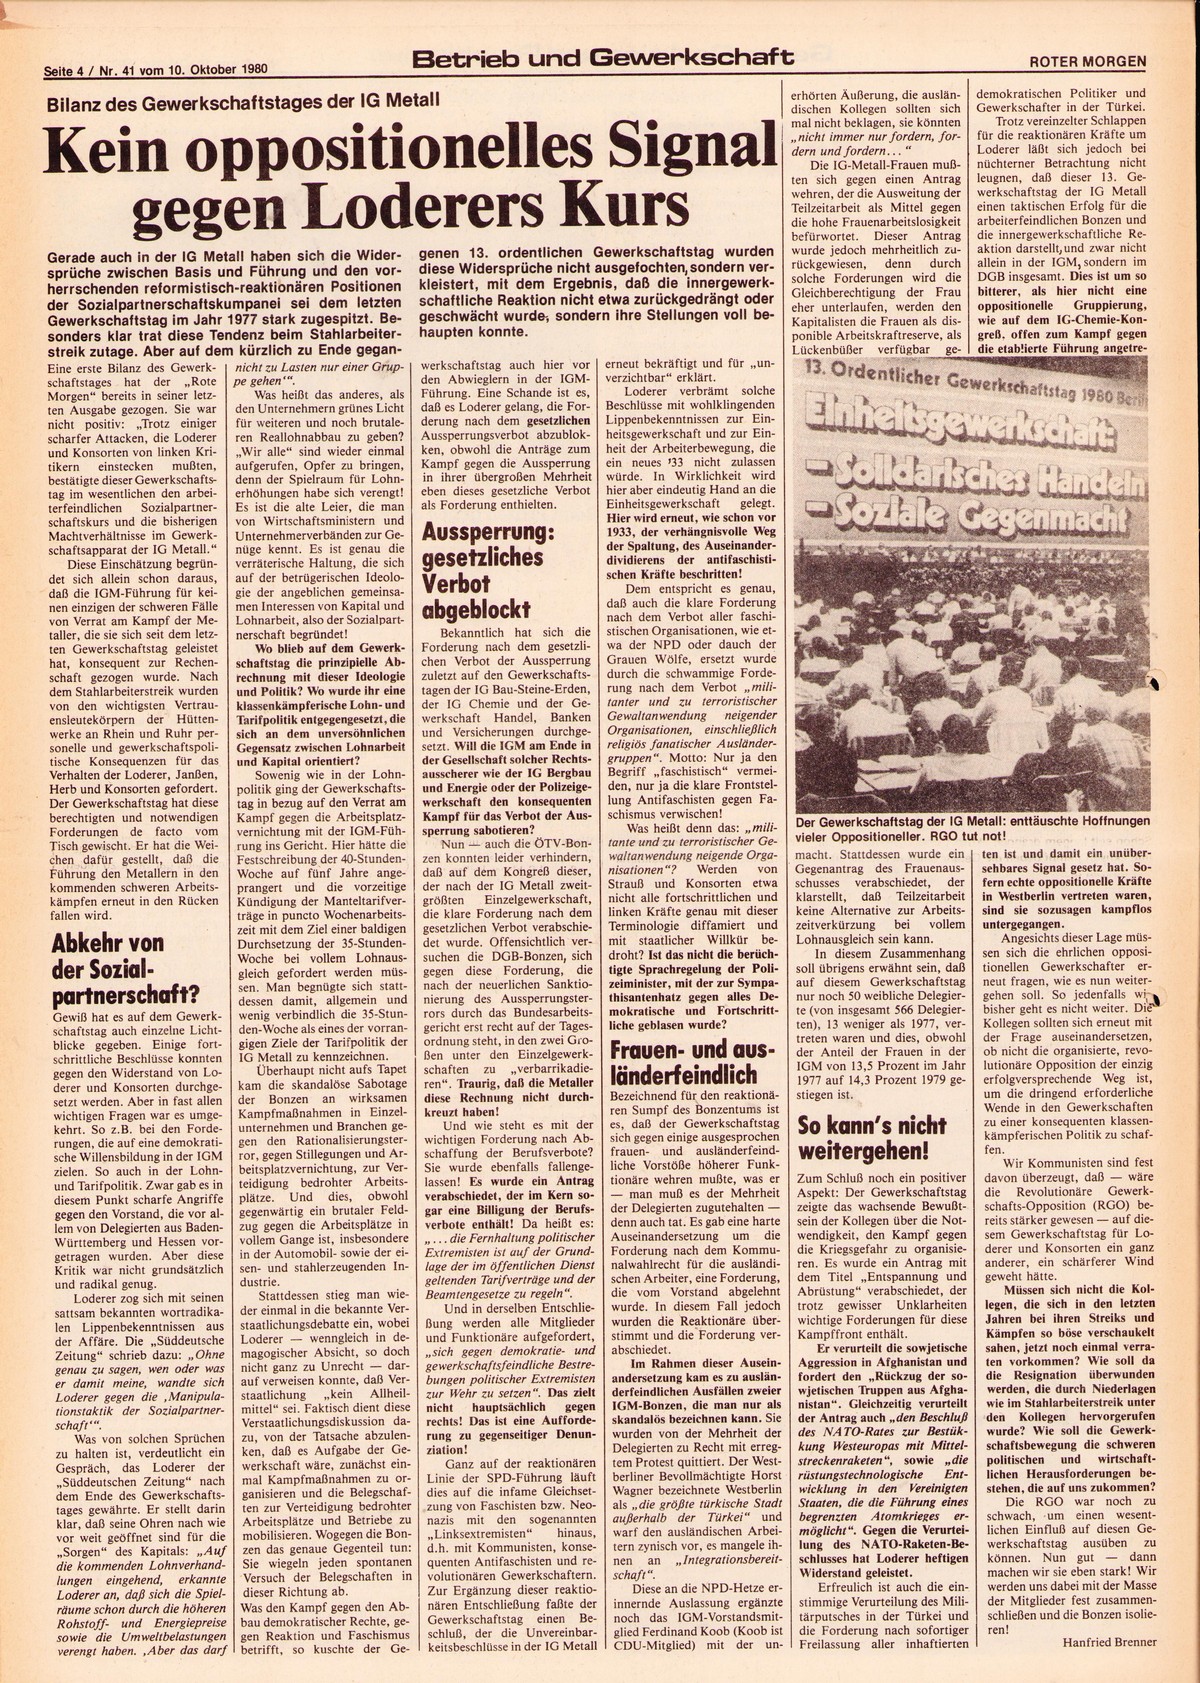 Roter Morgen, 14. Jg., 10. Oktobber 1980, Nr. 41, Seite 4